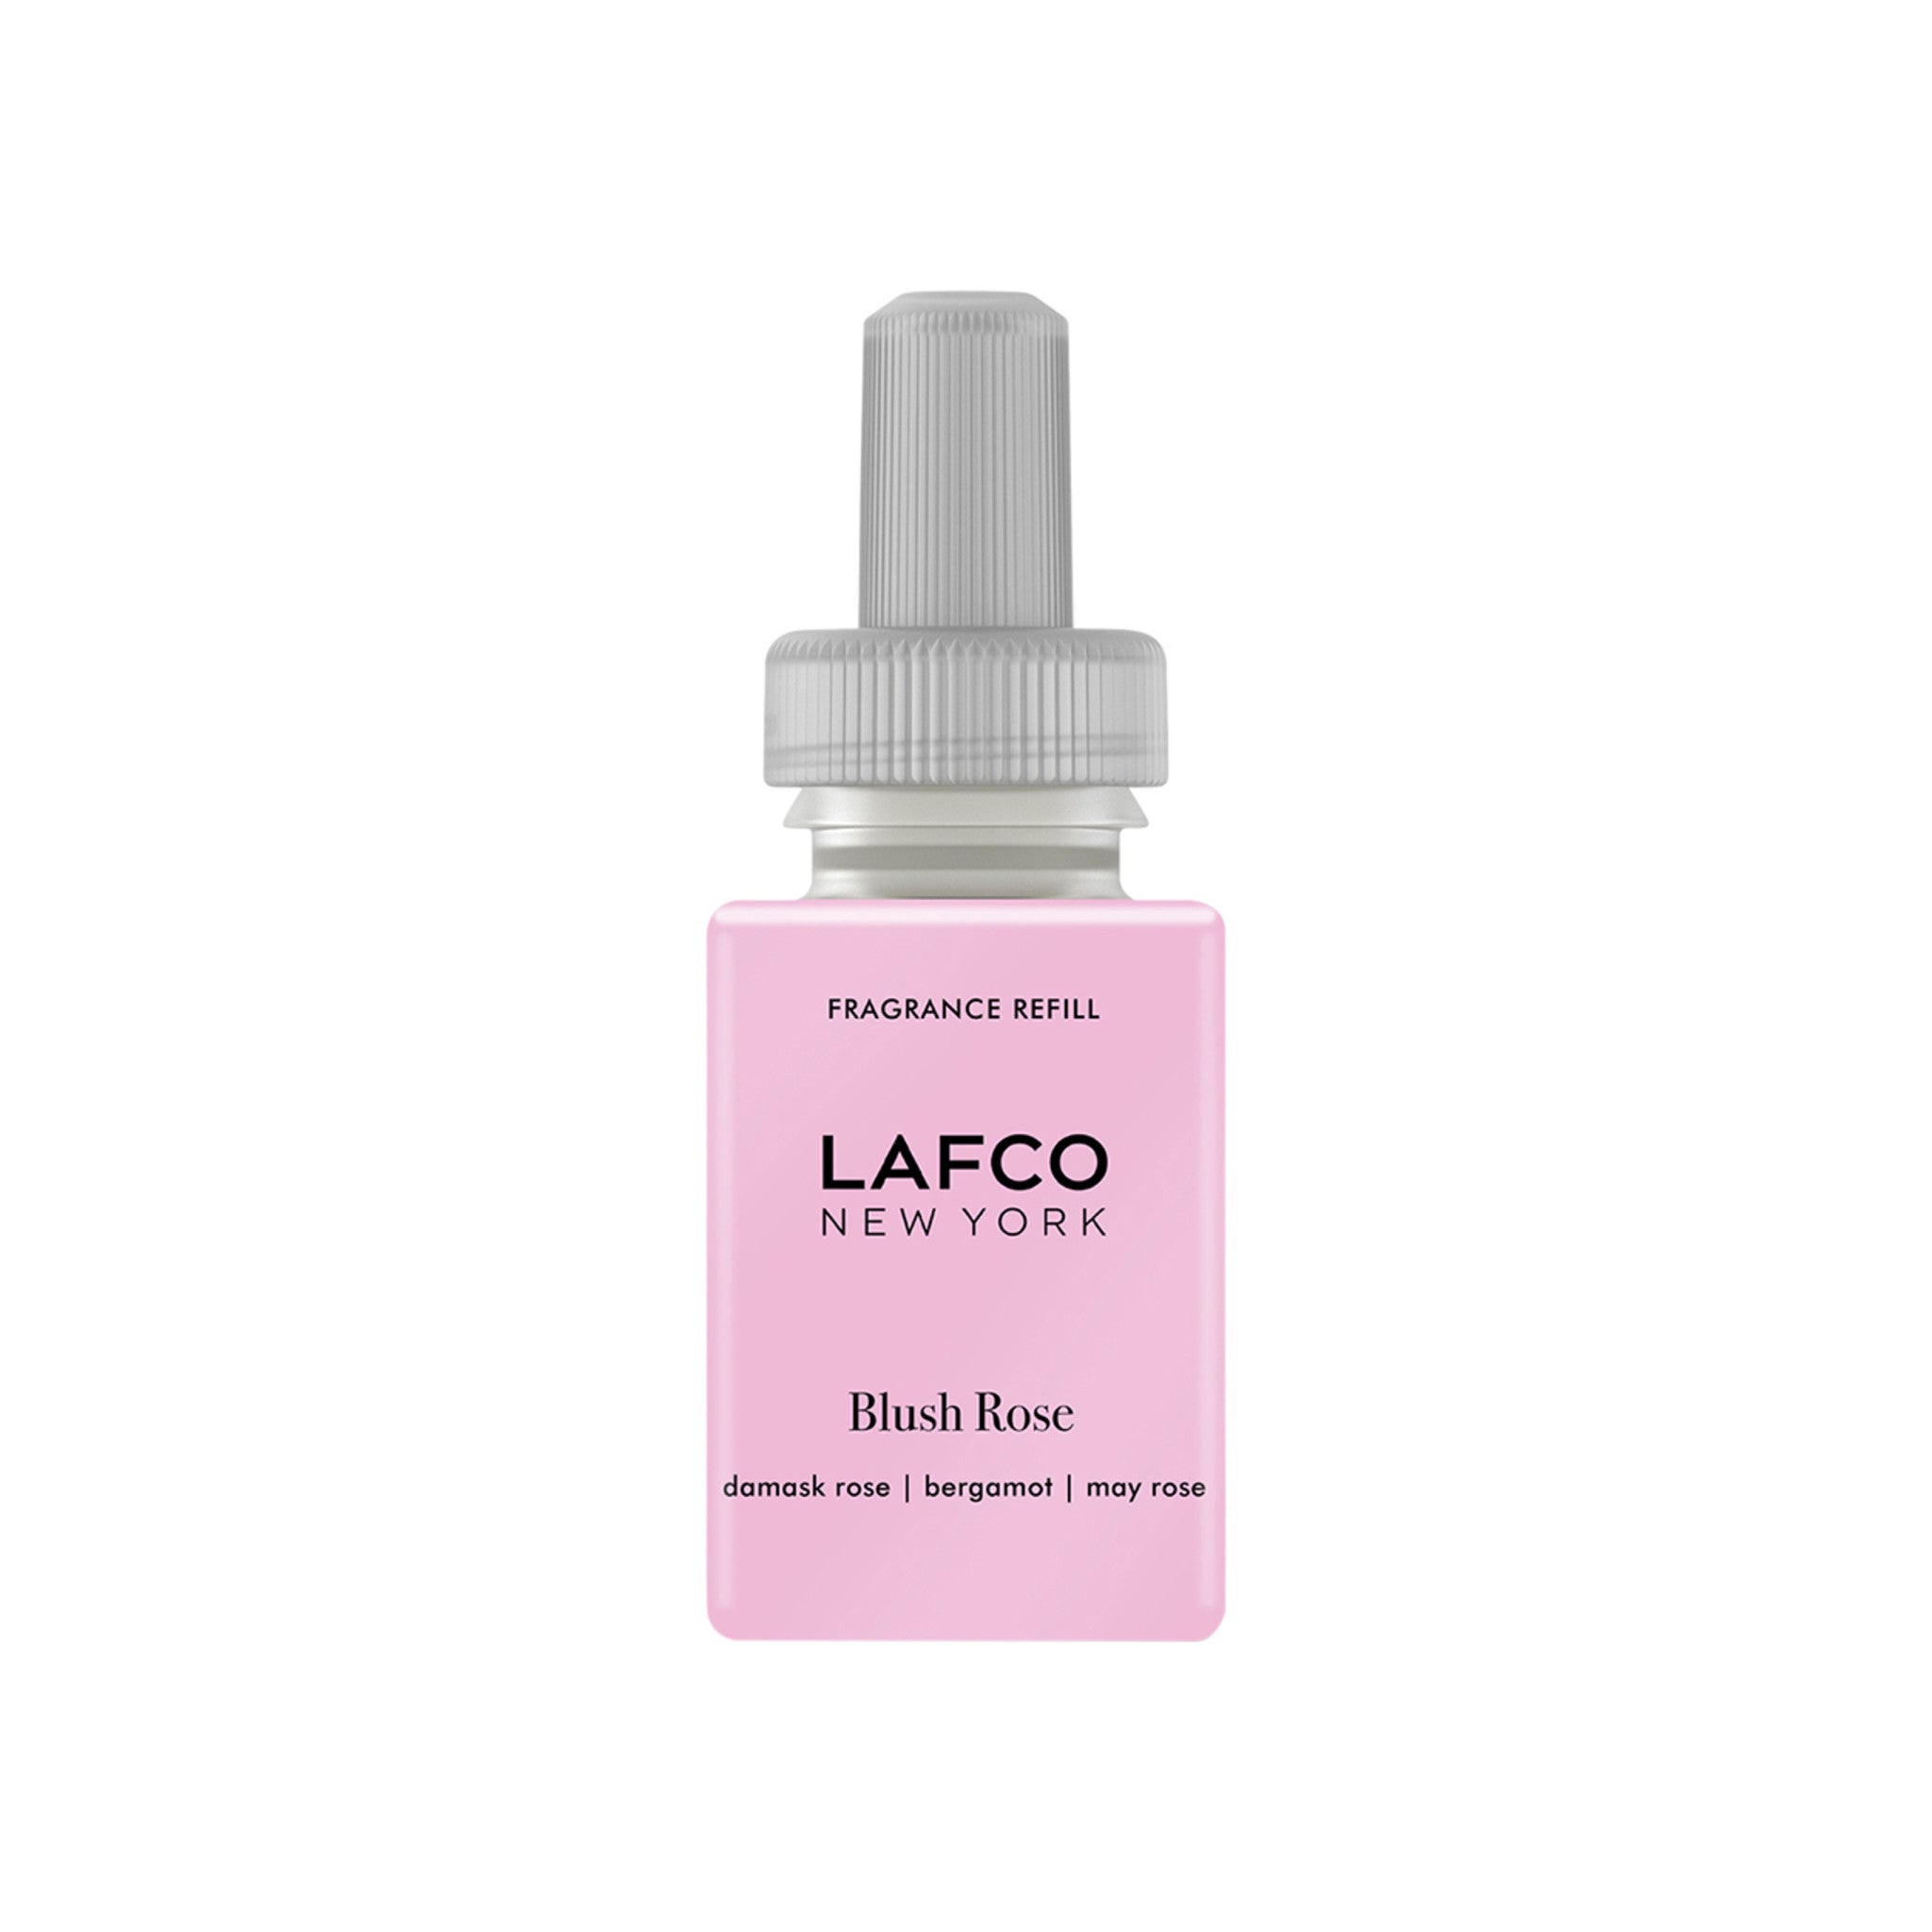 Lafco Pura Blush Rose Fragrance Refill main image.